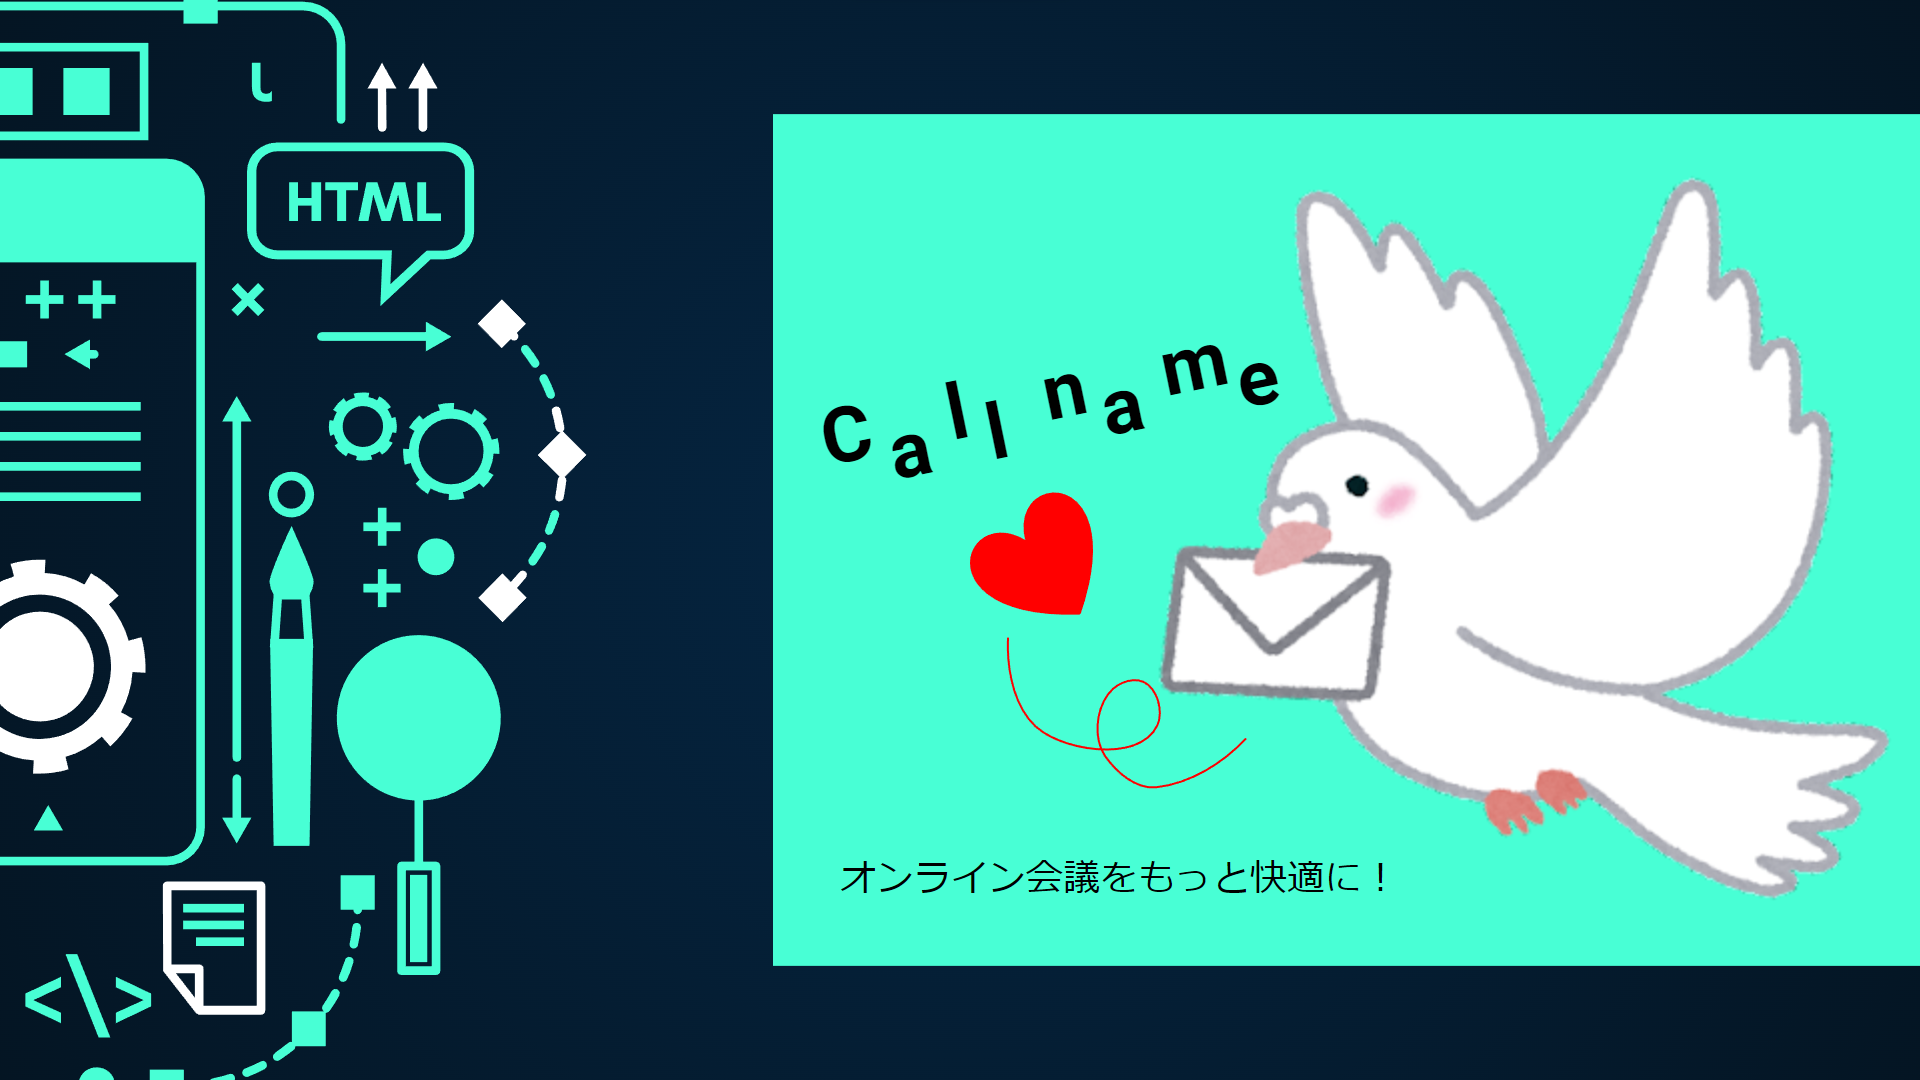 Callname